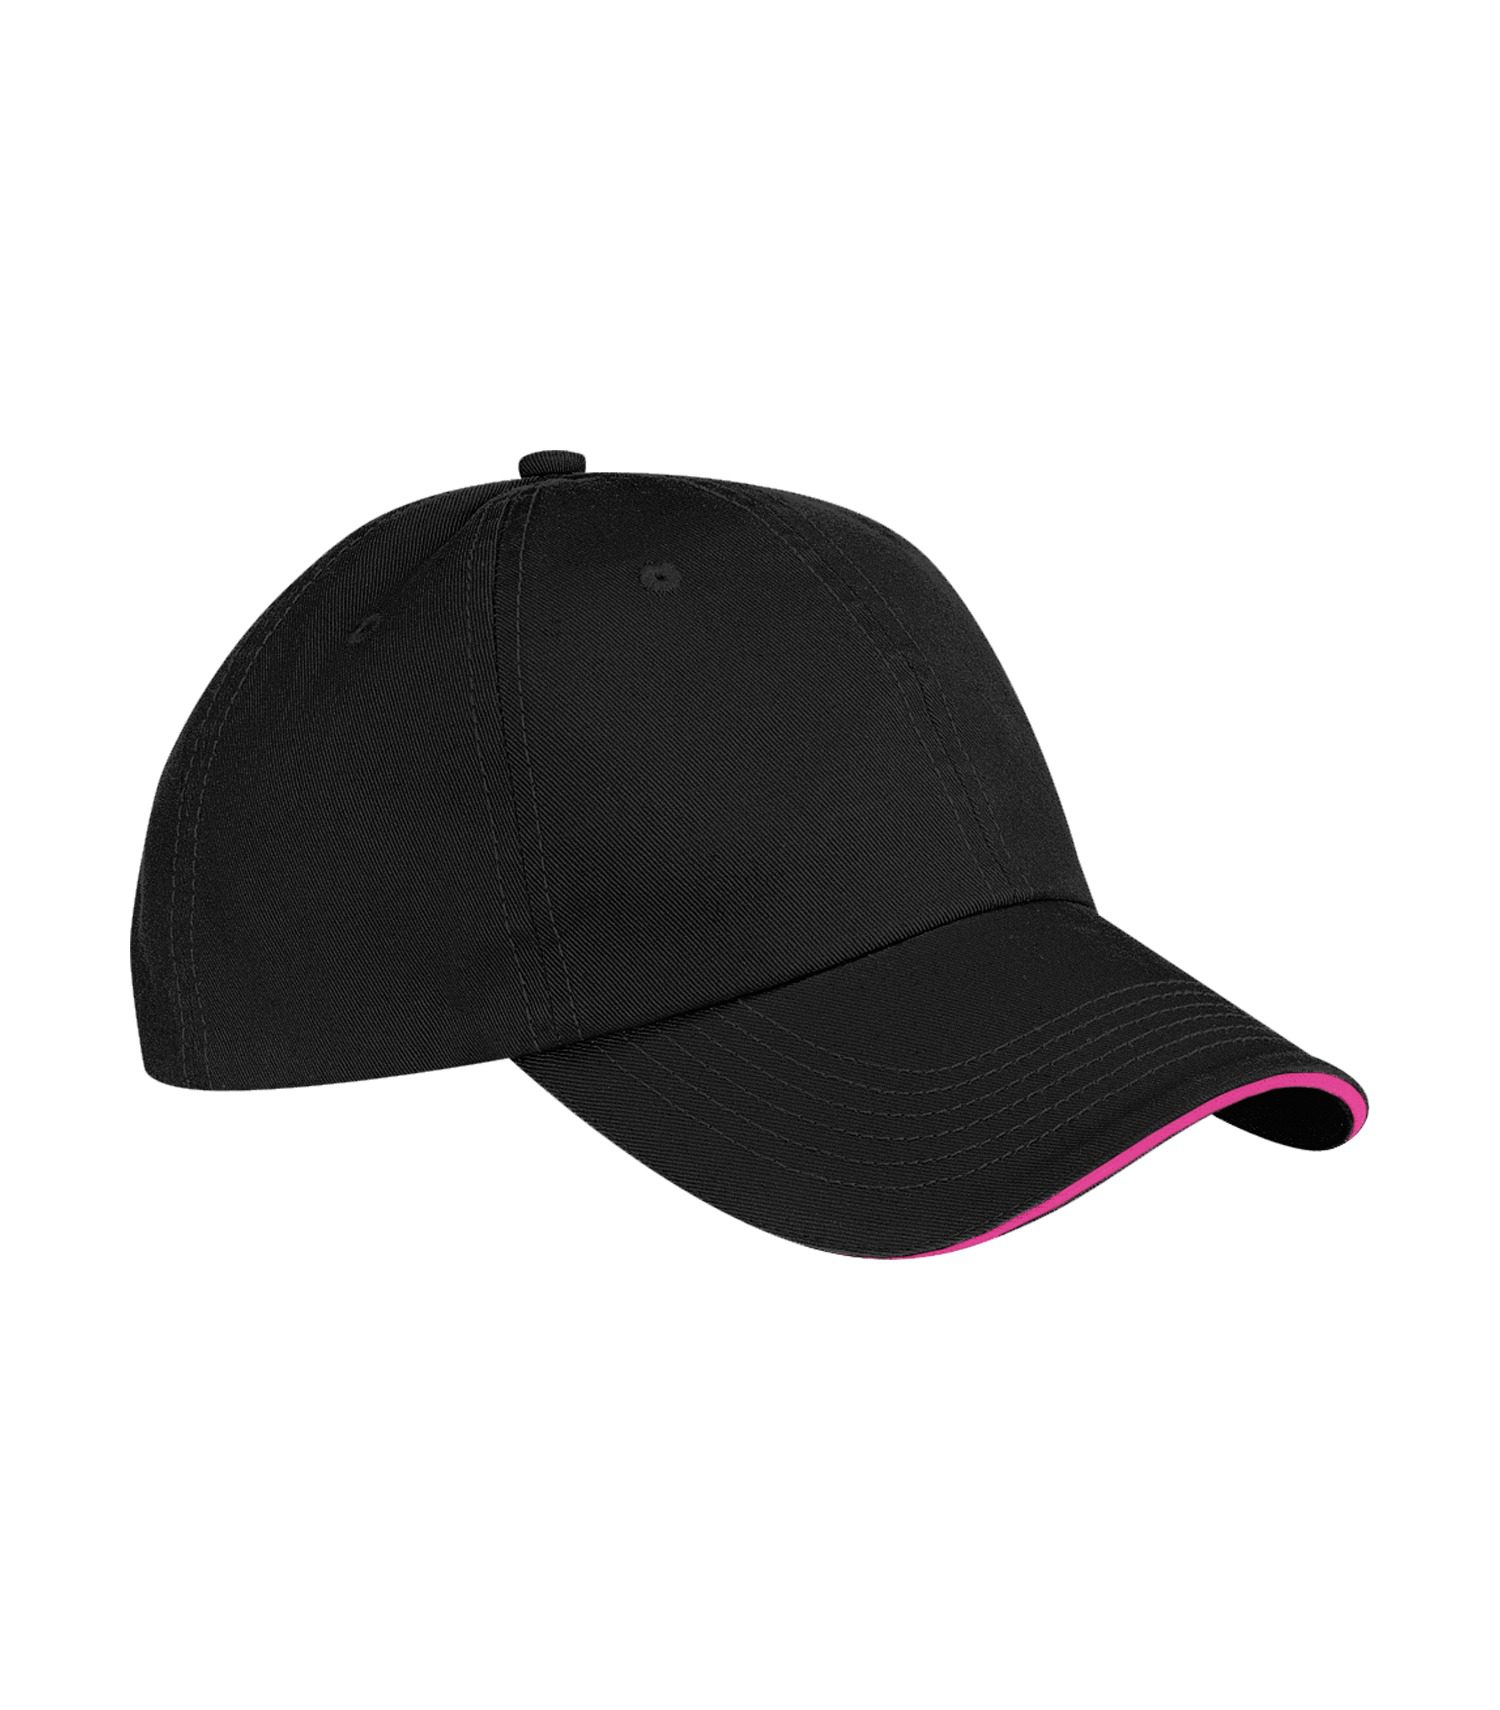 ATC™ SANDWICH BILL CAP #C140 Black / Tropical Pink